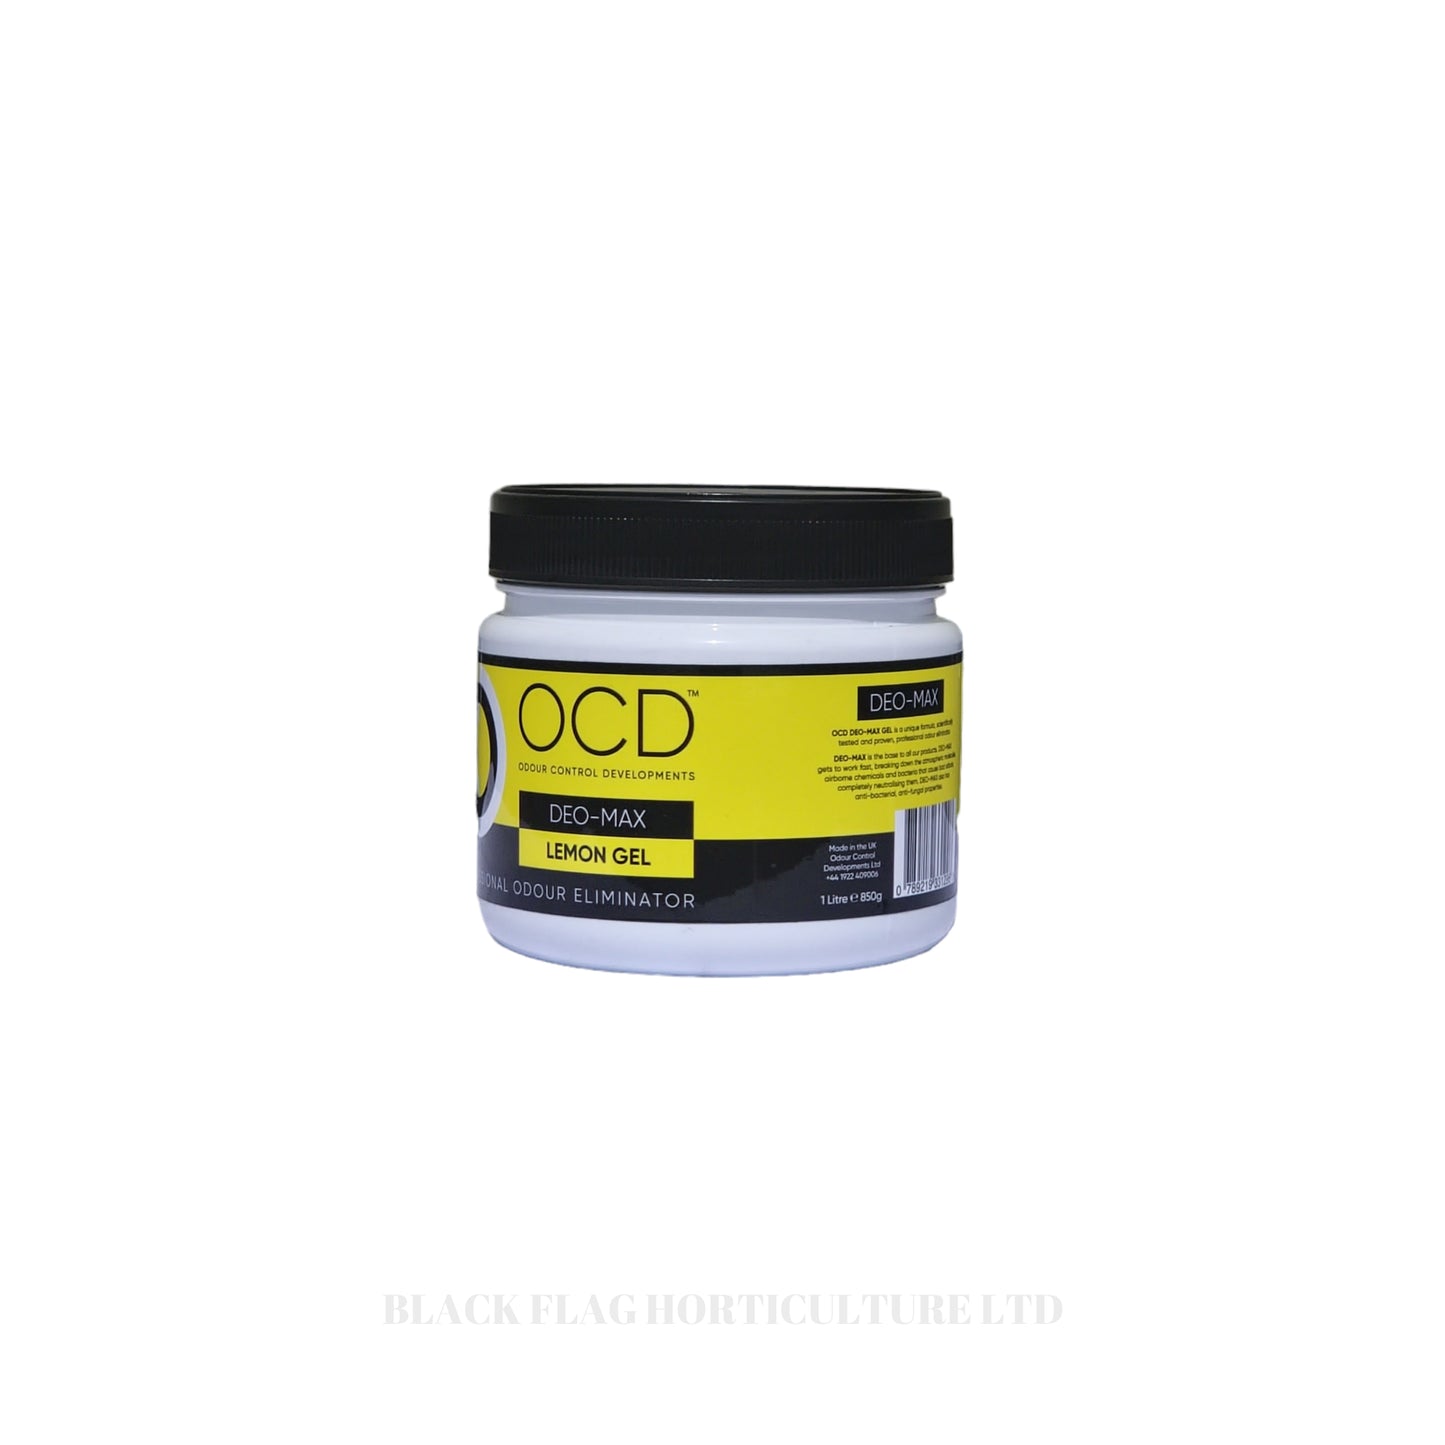 OCD - DEO Max Lemon Gel - 1 Litre